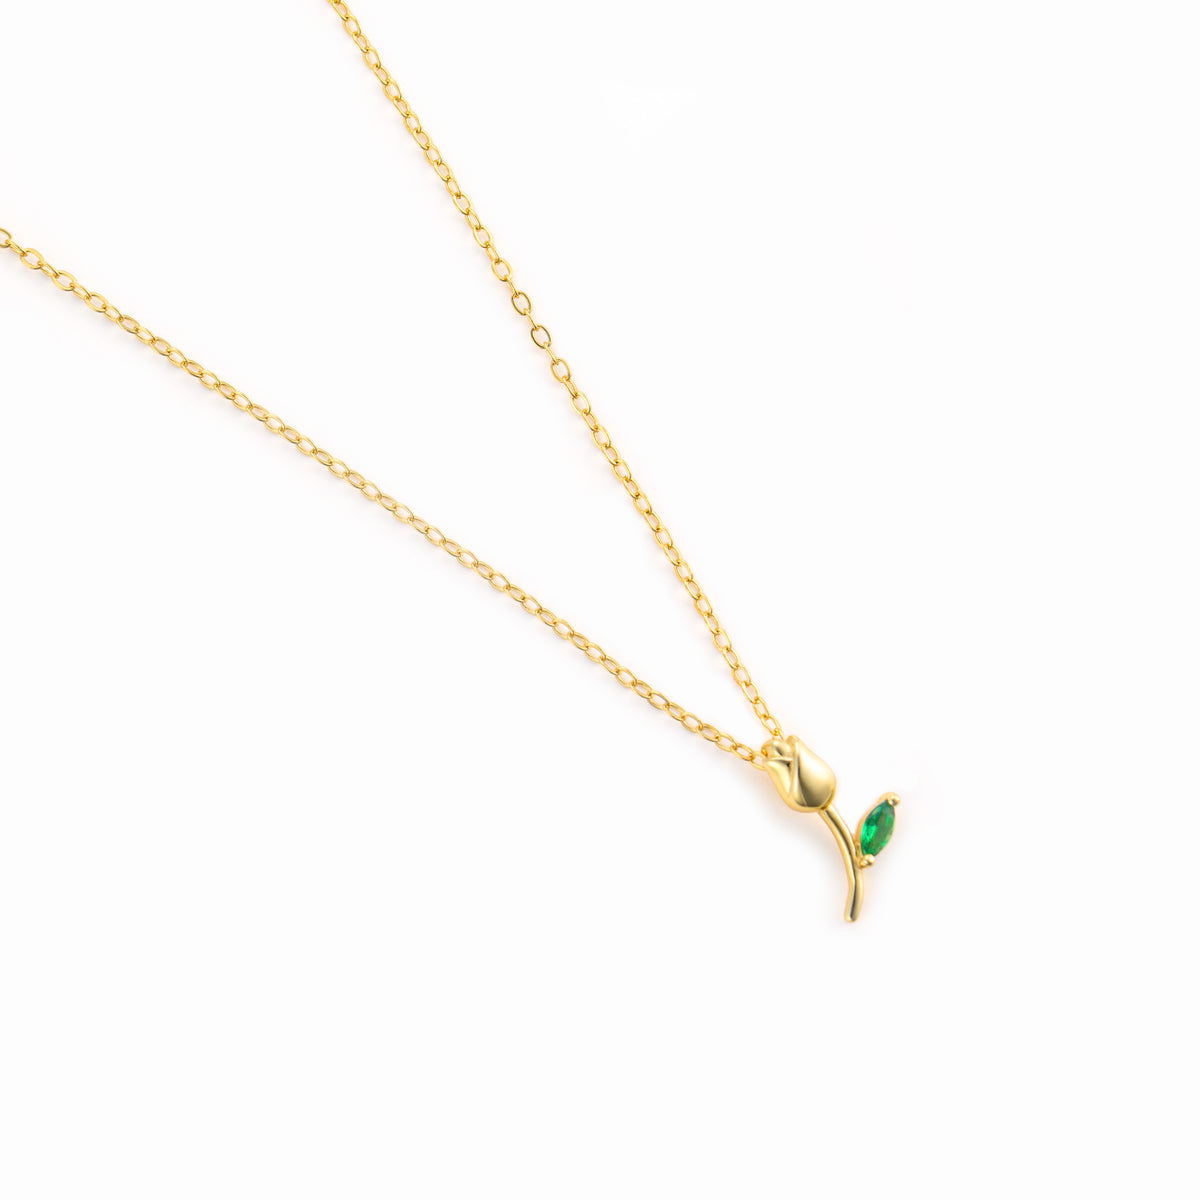 Petite Tulipe silver pendant necklace, gold plated